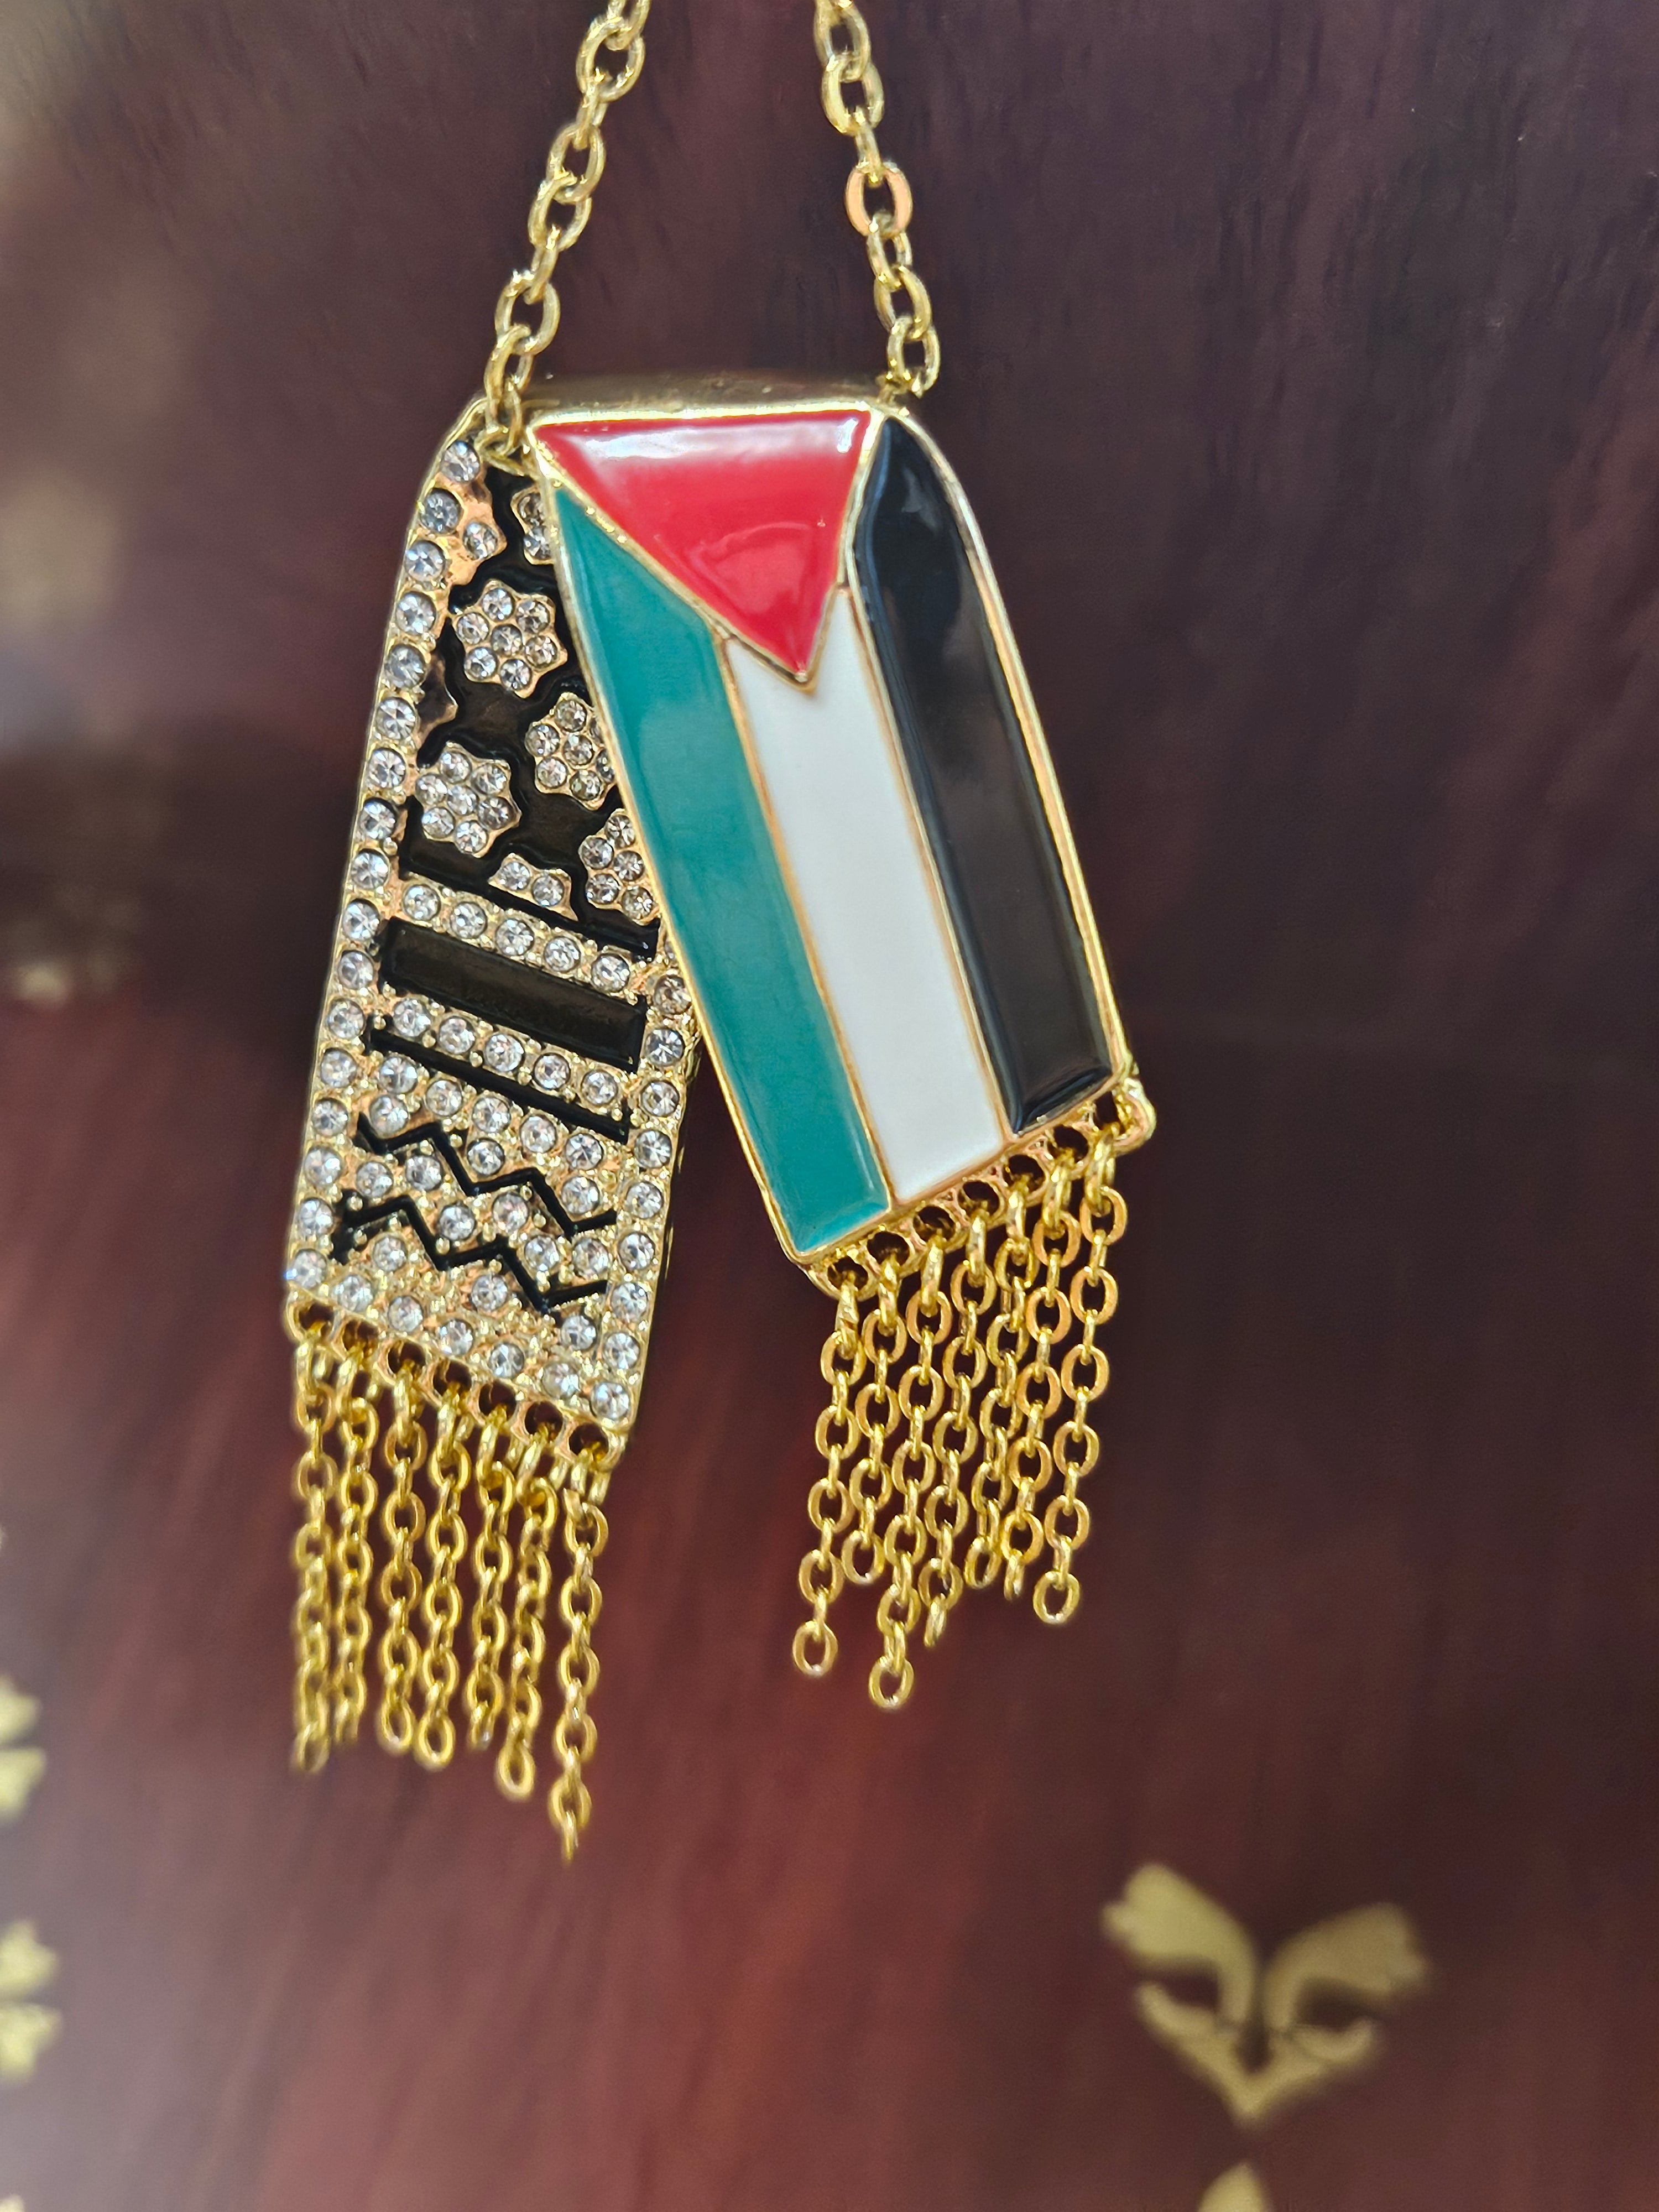 Palestine Keffiyeh Necklace - Habibi Heritage